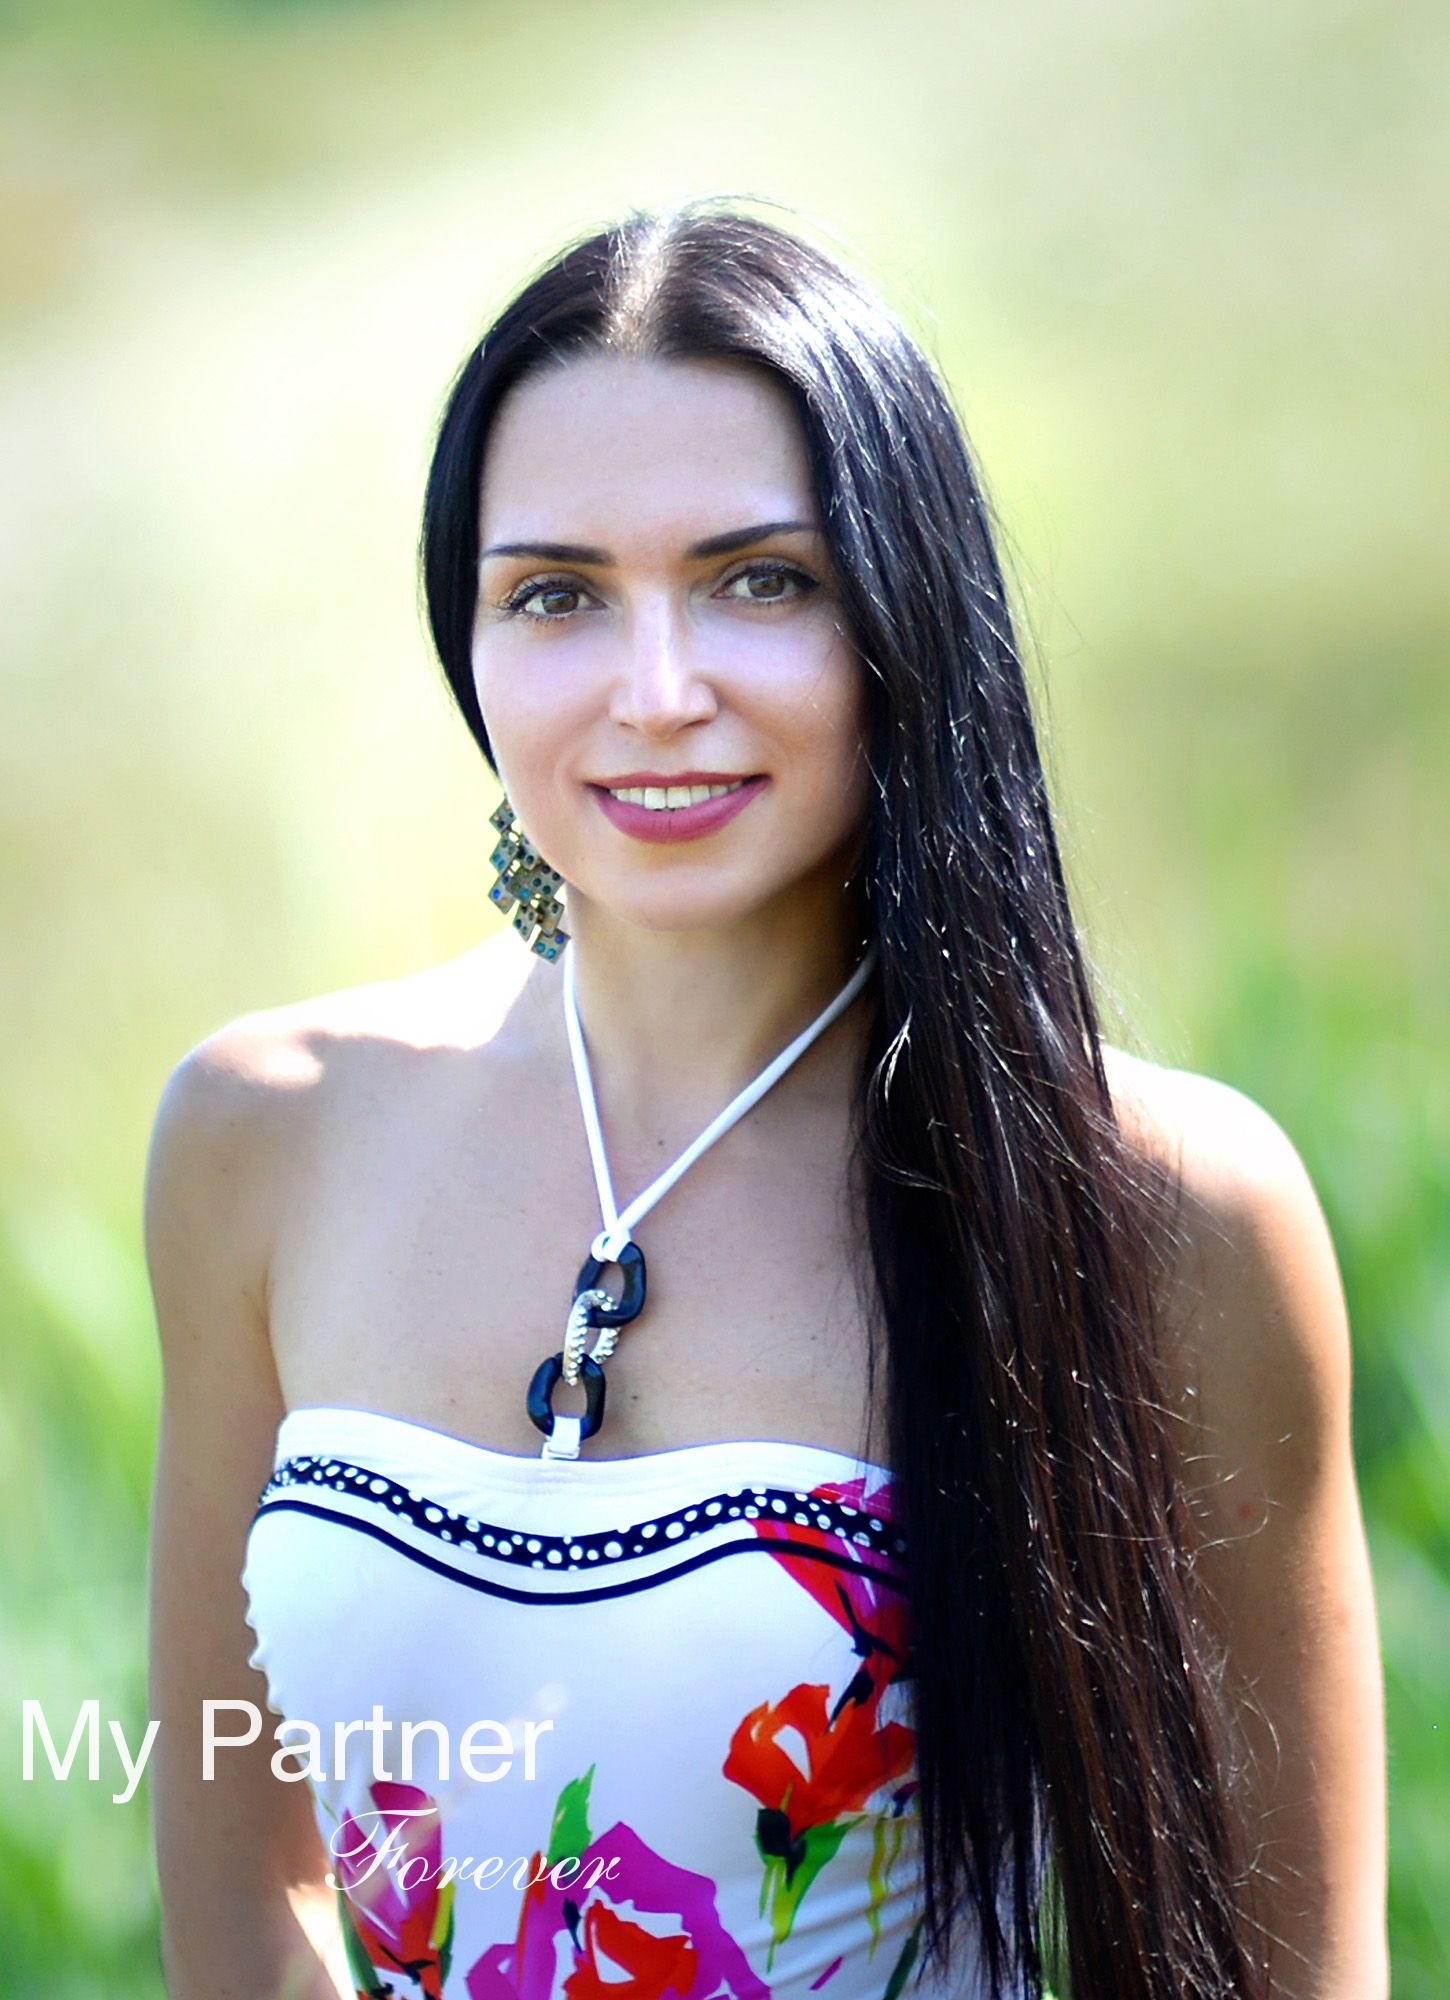 Dating Site to Meet Stunning Ukrainian Girl Elena from Kharkov, Ukraine